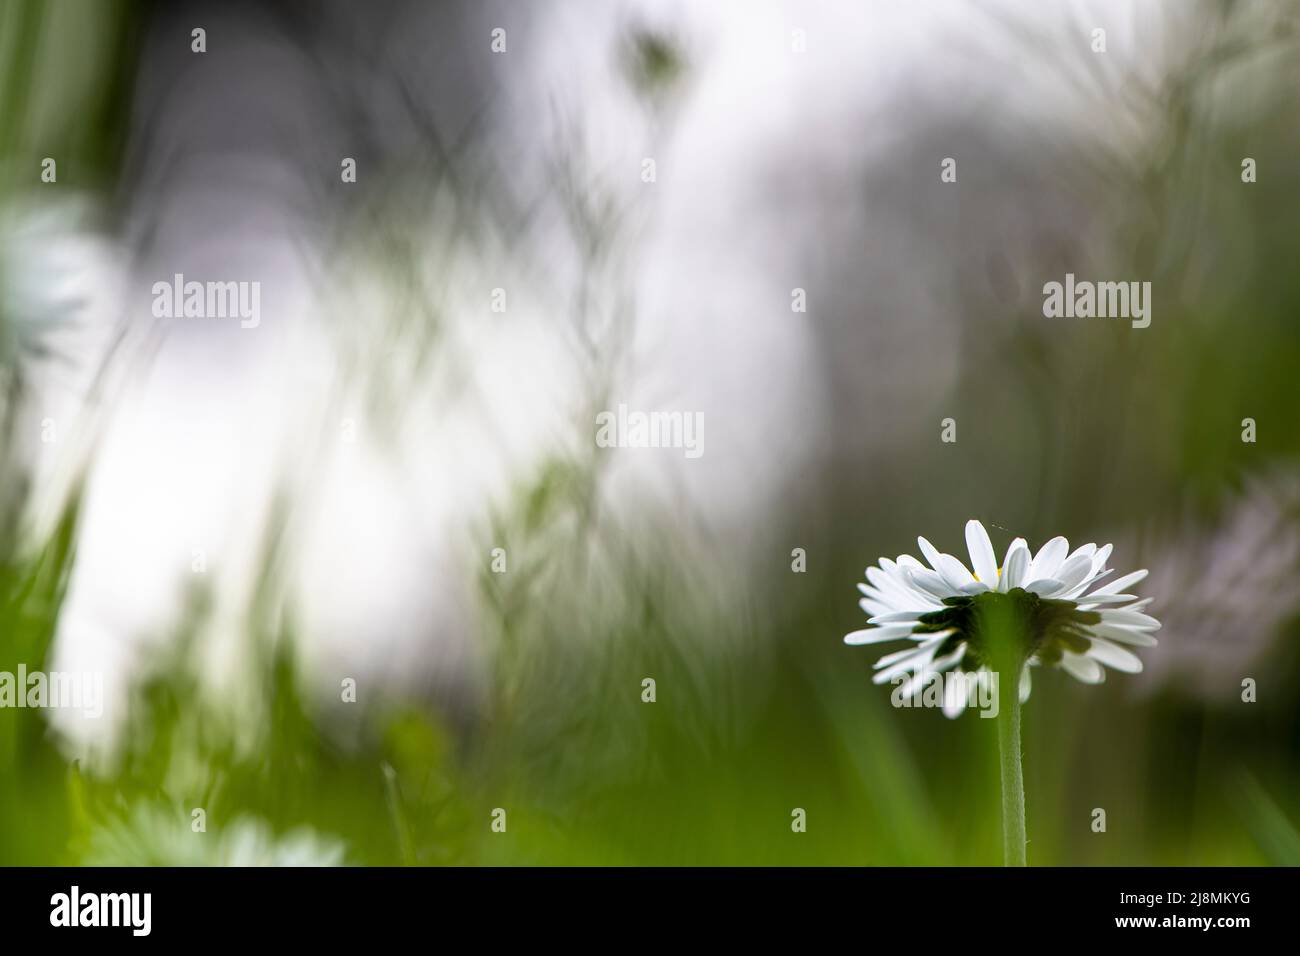 single daisy blossom in abstract garden view Stock Photo